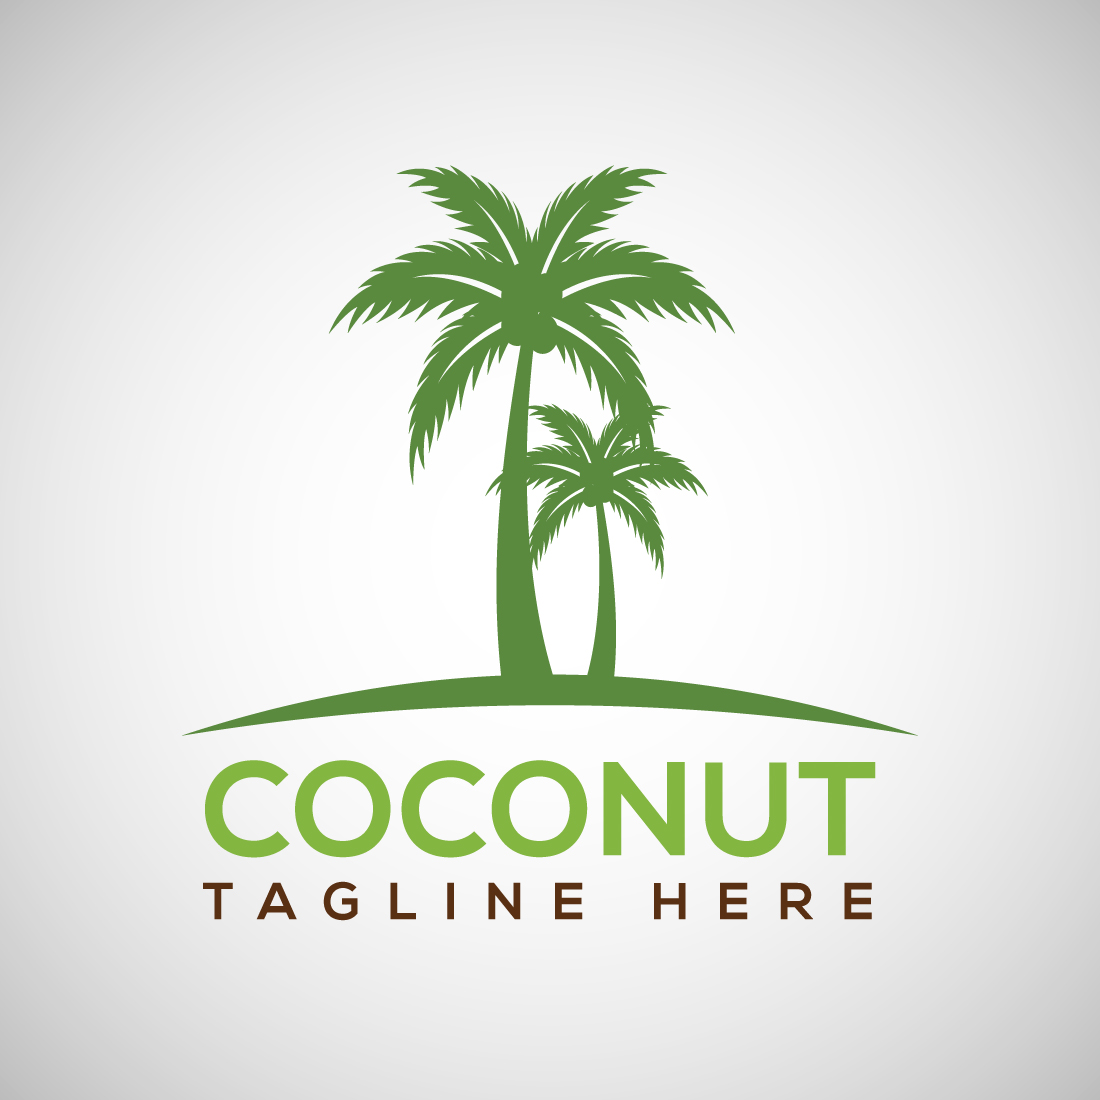 Coconut Tree Green Logo Design cover image.